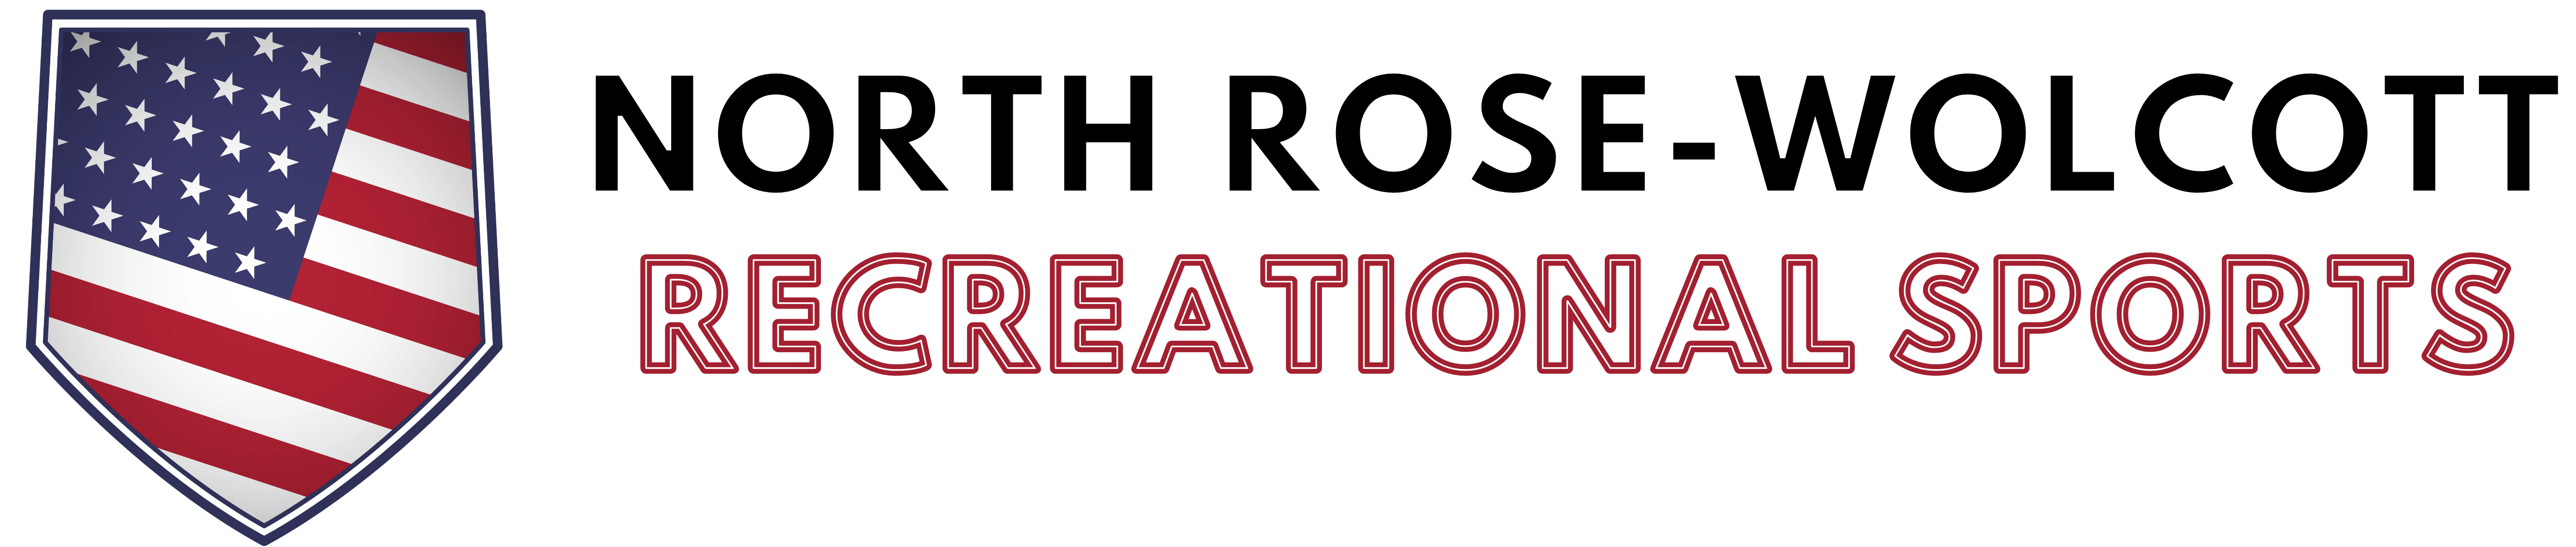 North Rose - Wolcott Recreational Sports